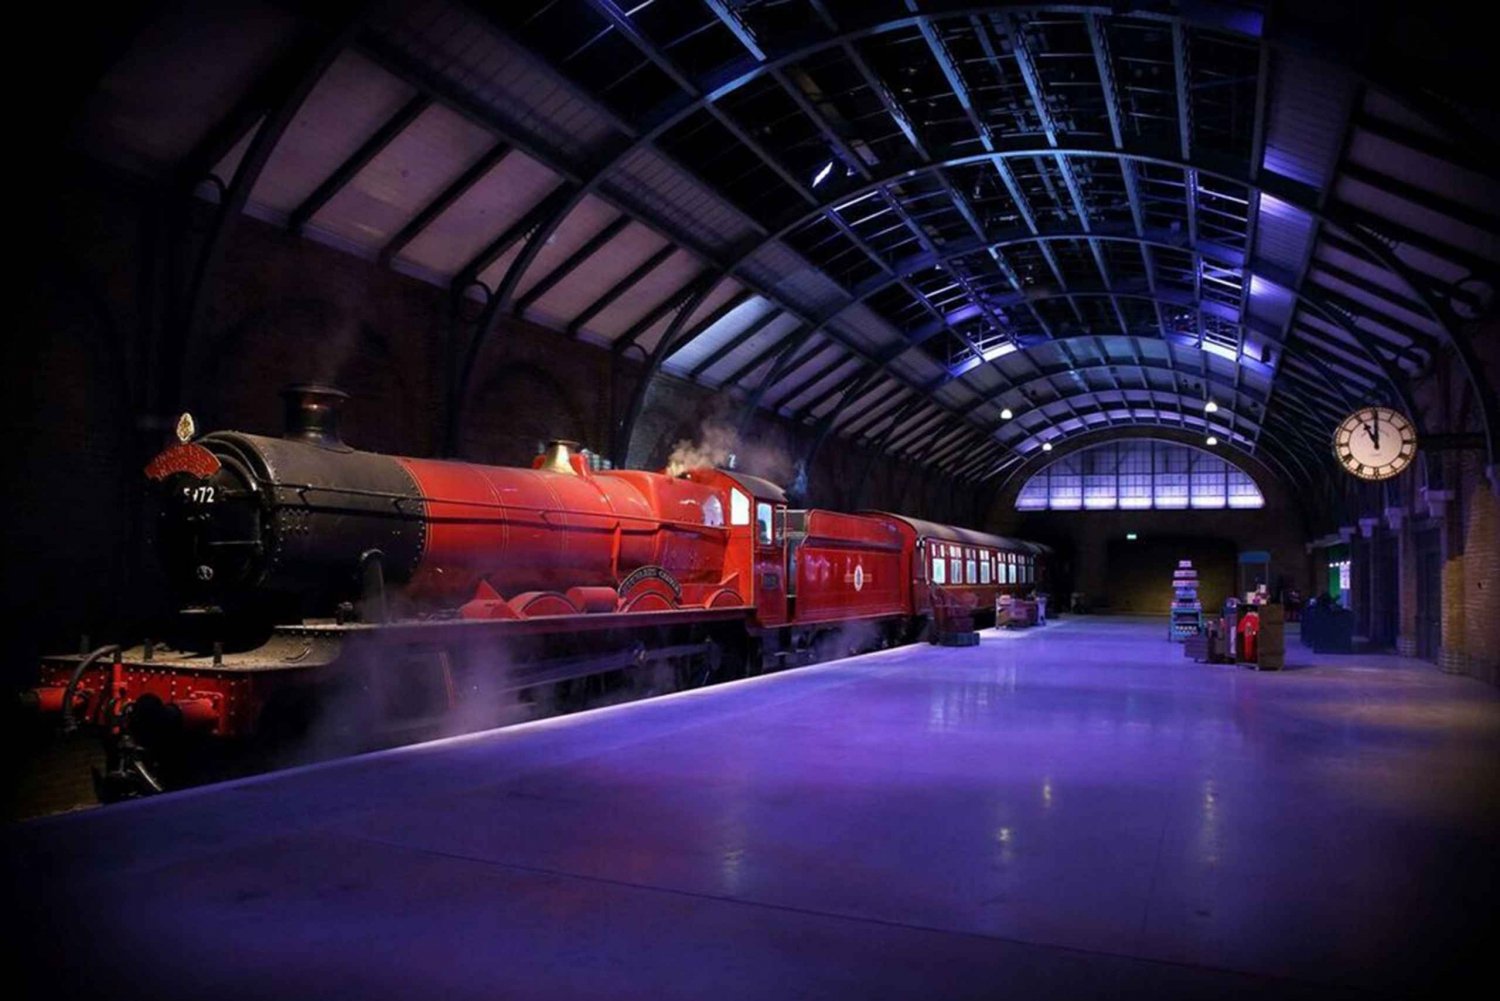 Lontoo: Harry Potter Studio Tour ja Oxfordin päiväretki